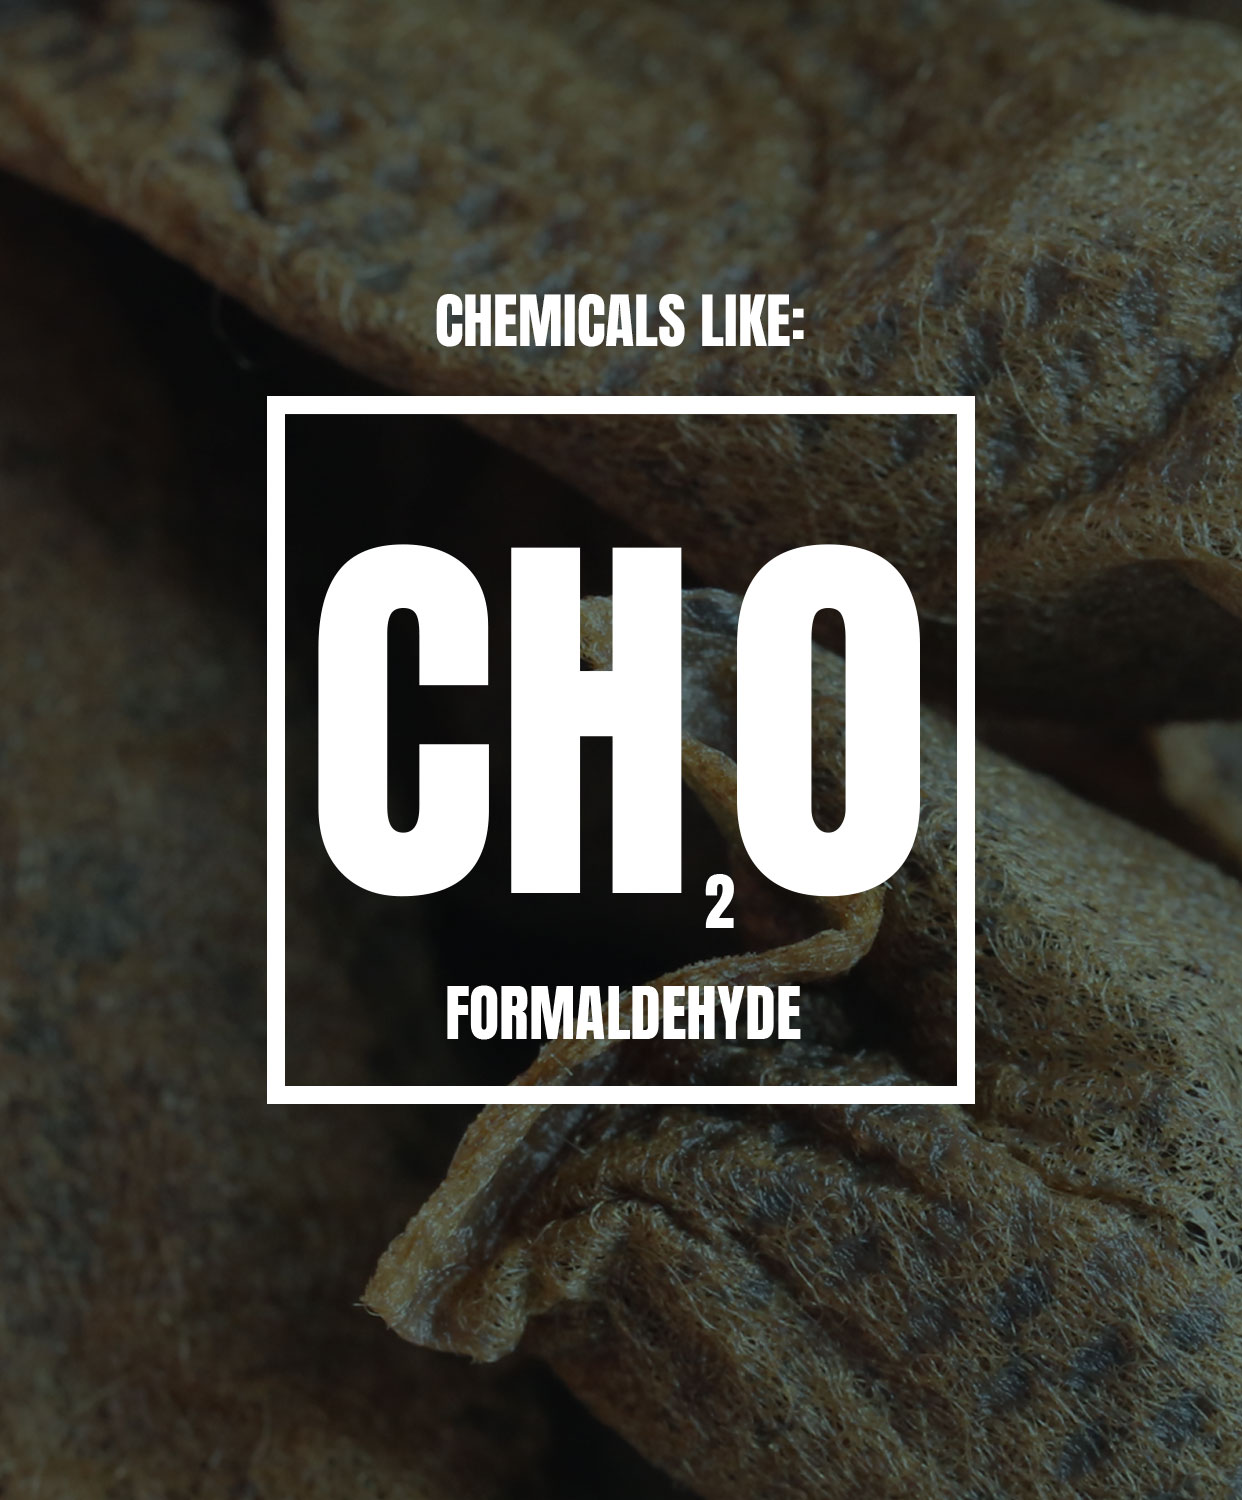 Chemicals like formaldehyde